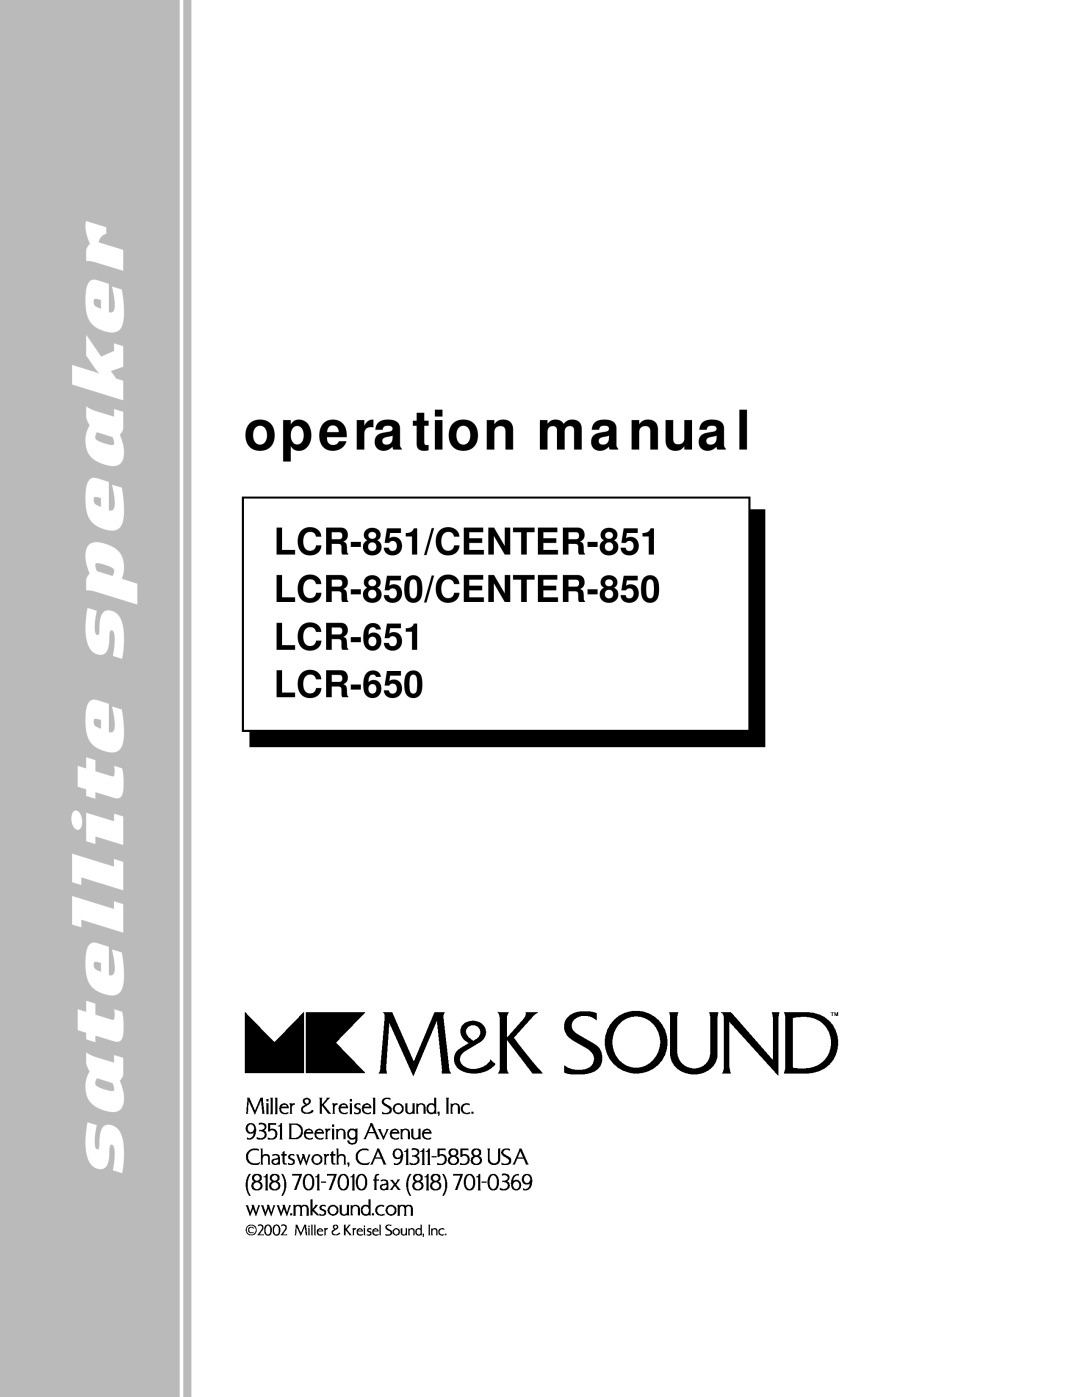 MK Sound operation manual satellite speaker, LCR-851/CENTER-851 LCR-850/CENTER-850 LCR-651 LCR-650 